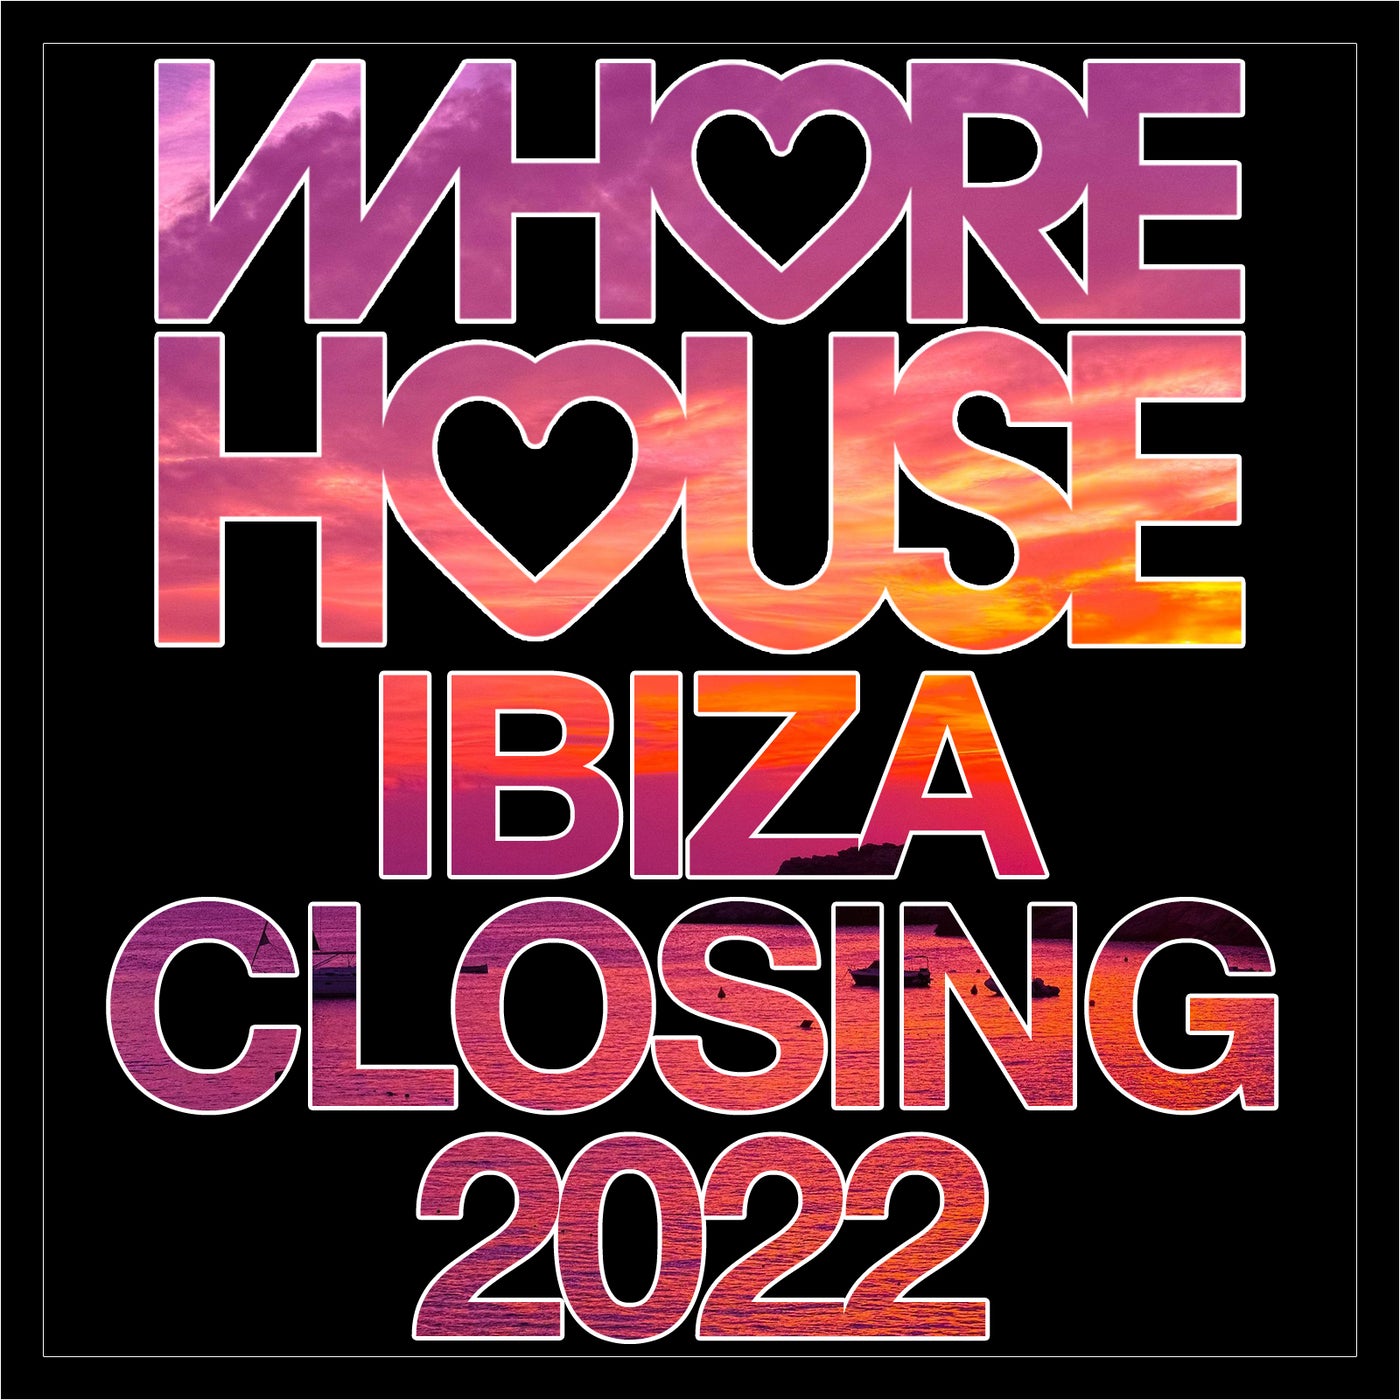 Whore House Ibiza Closing